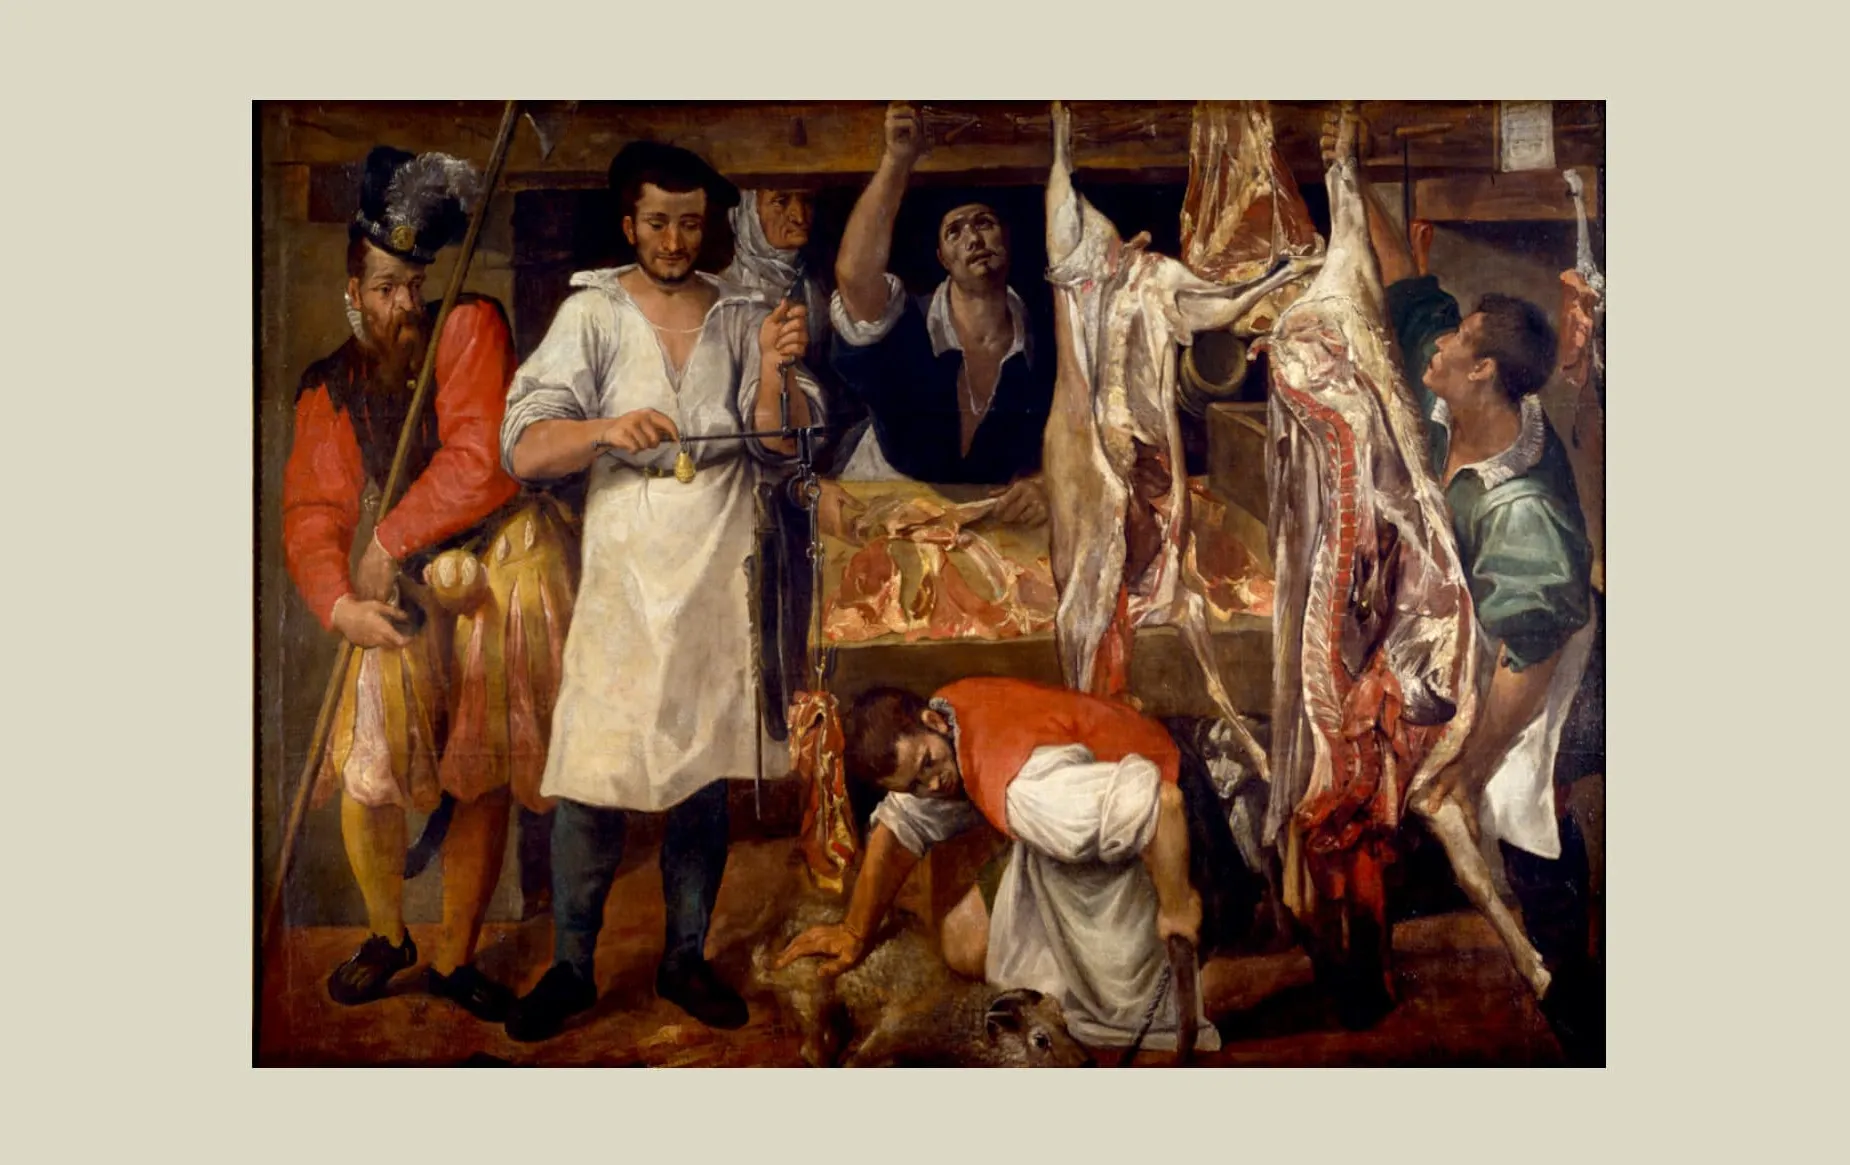 Annibale Carracci: The Butcher's Shop